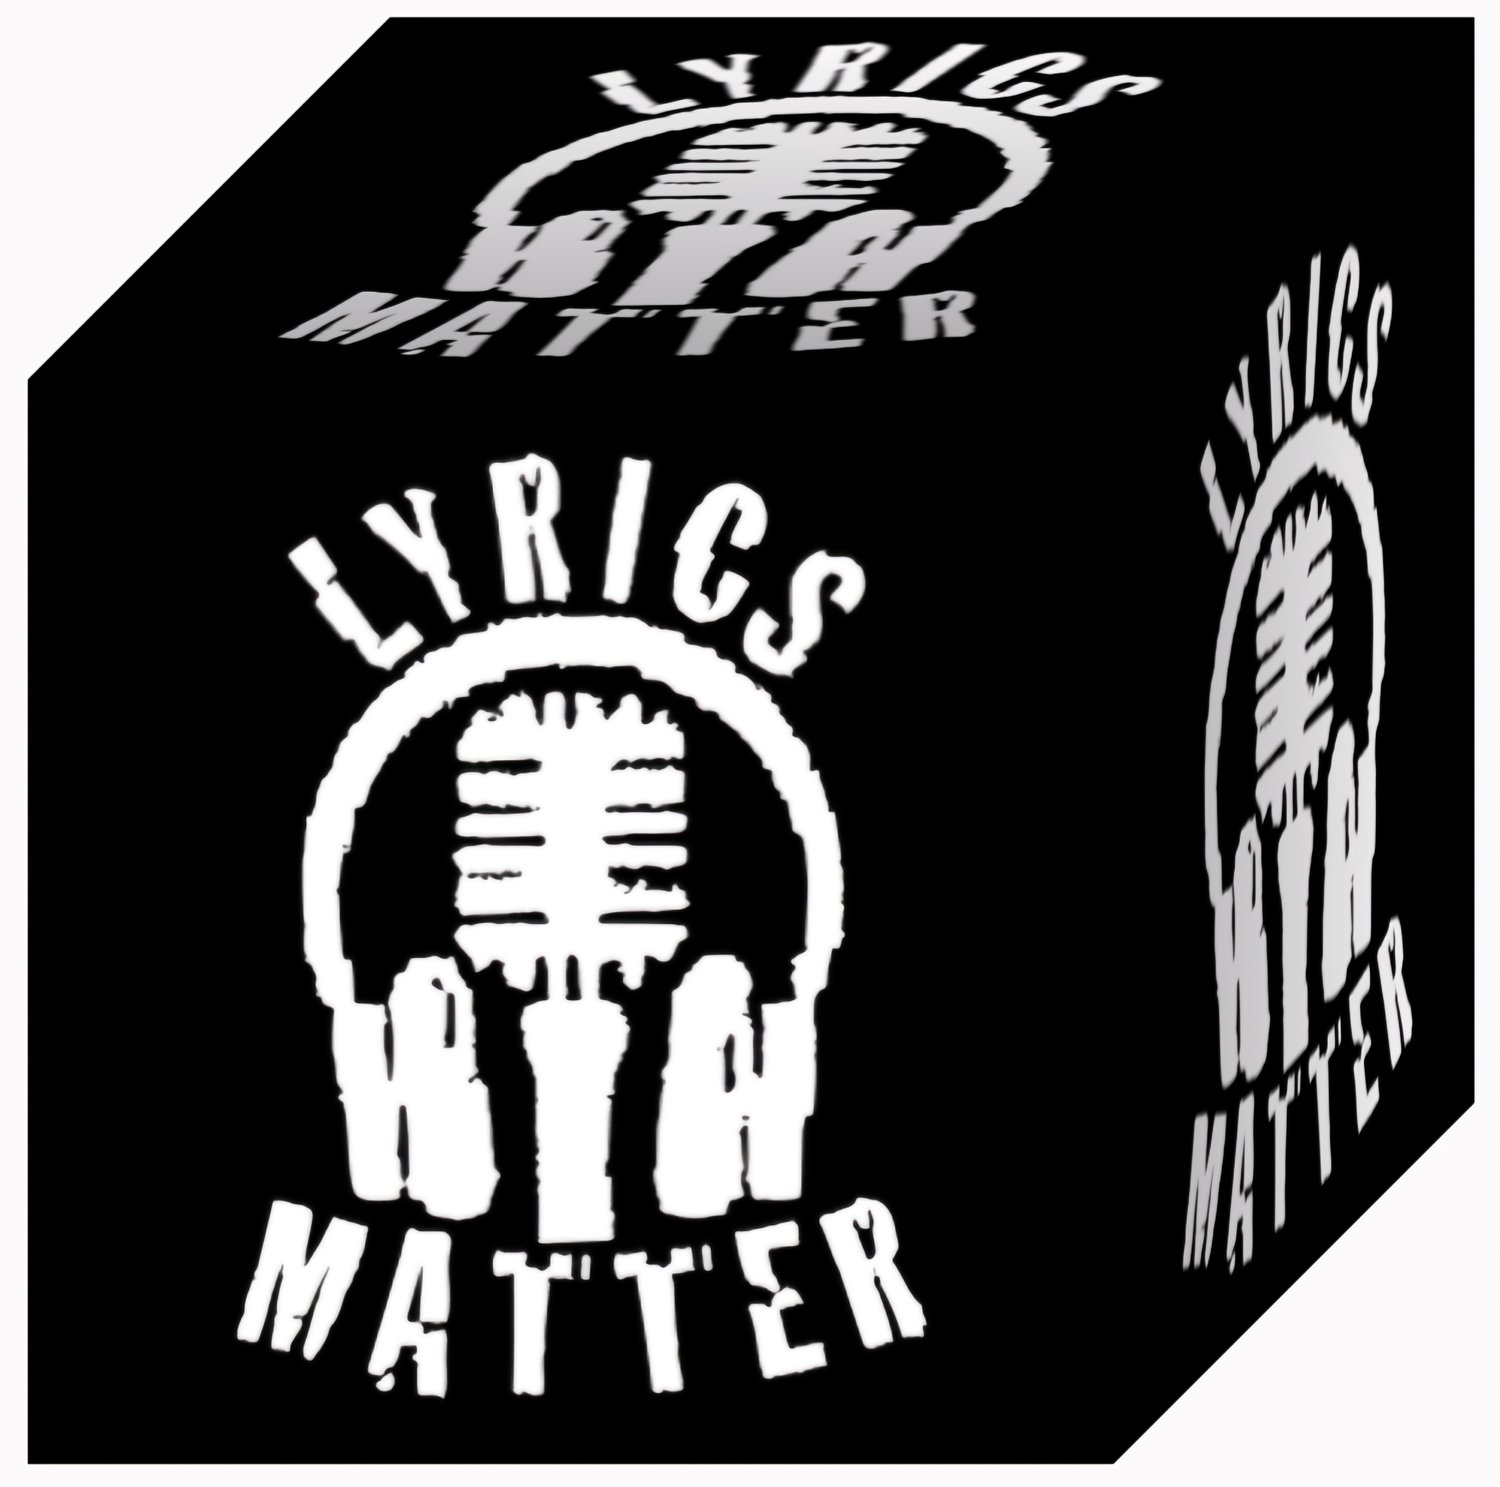 The Lyrics Matter Foundation